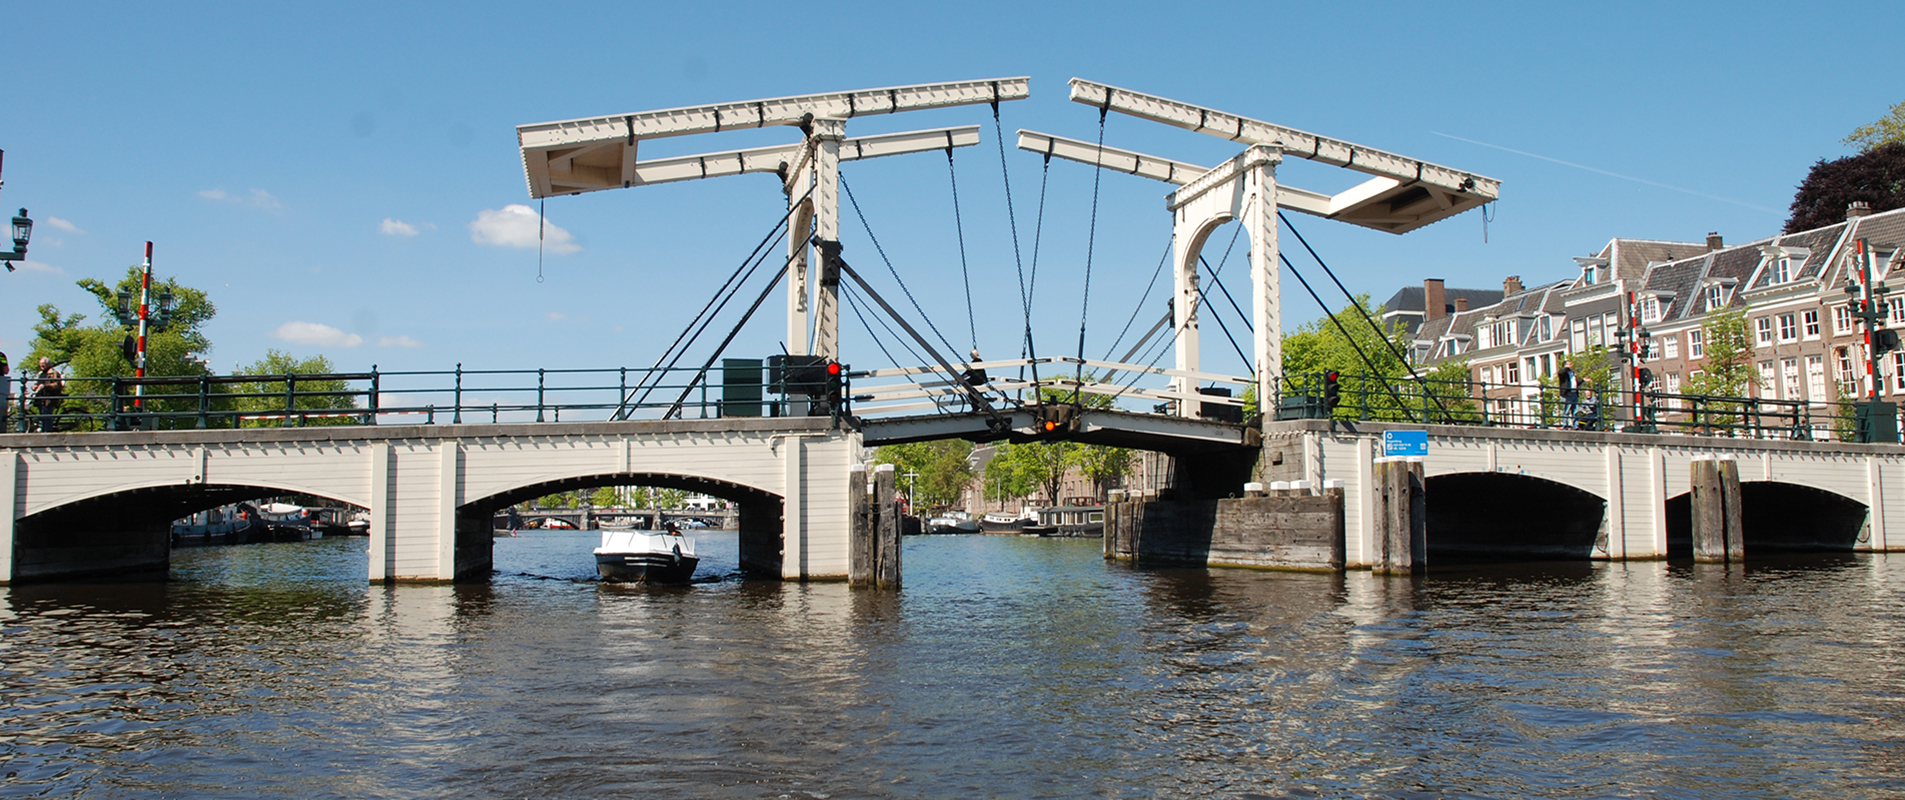 boat-tour-Amsterdam-Amstel-Skinny Bridge-Golden Age-17th century